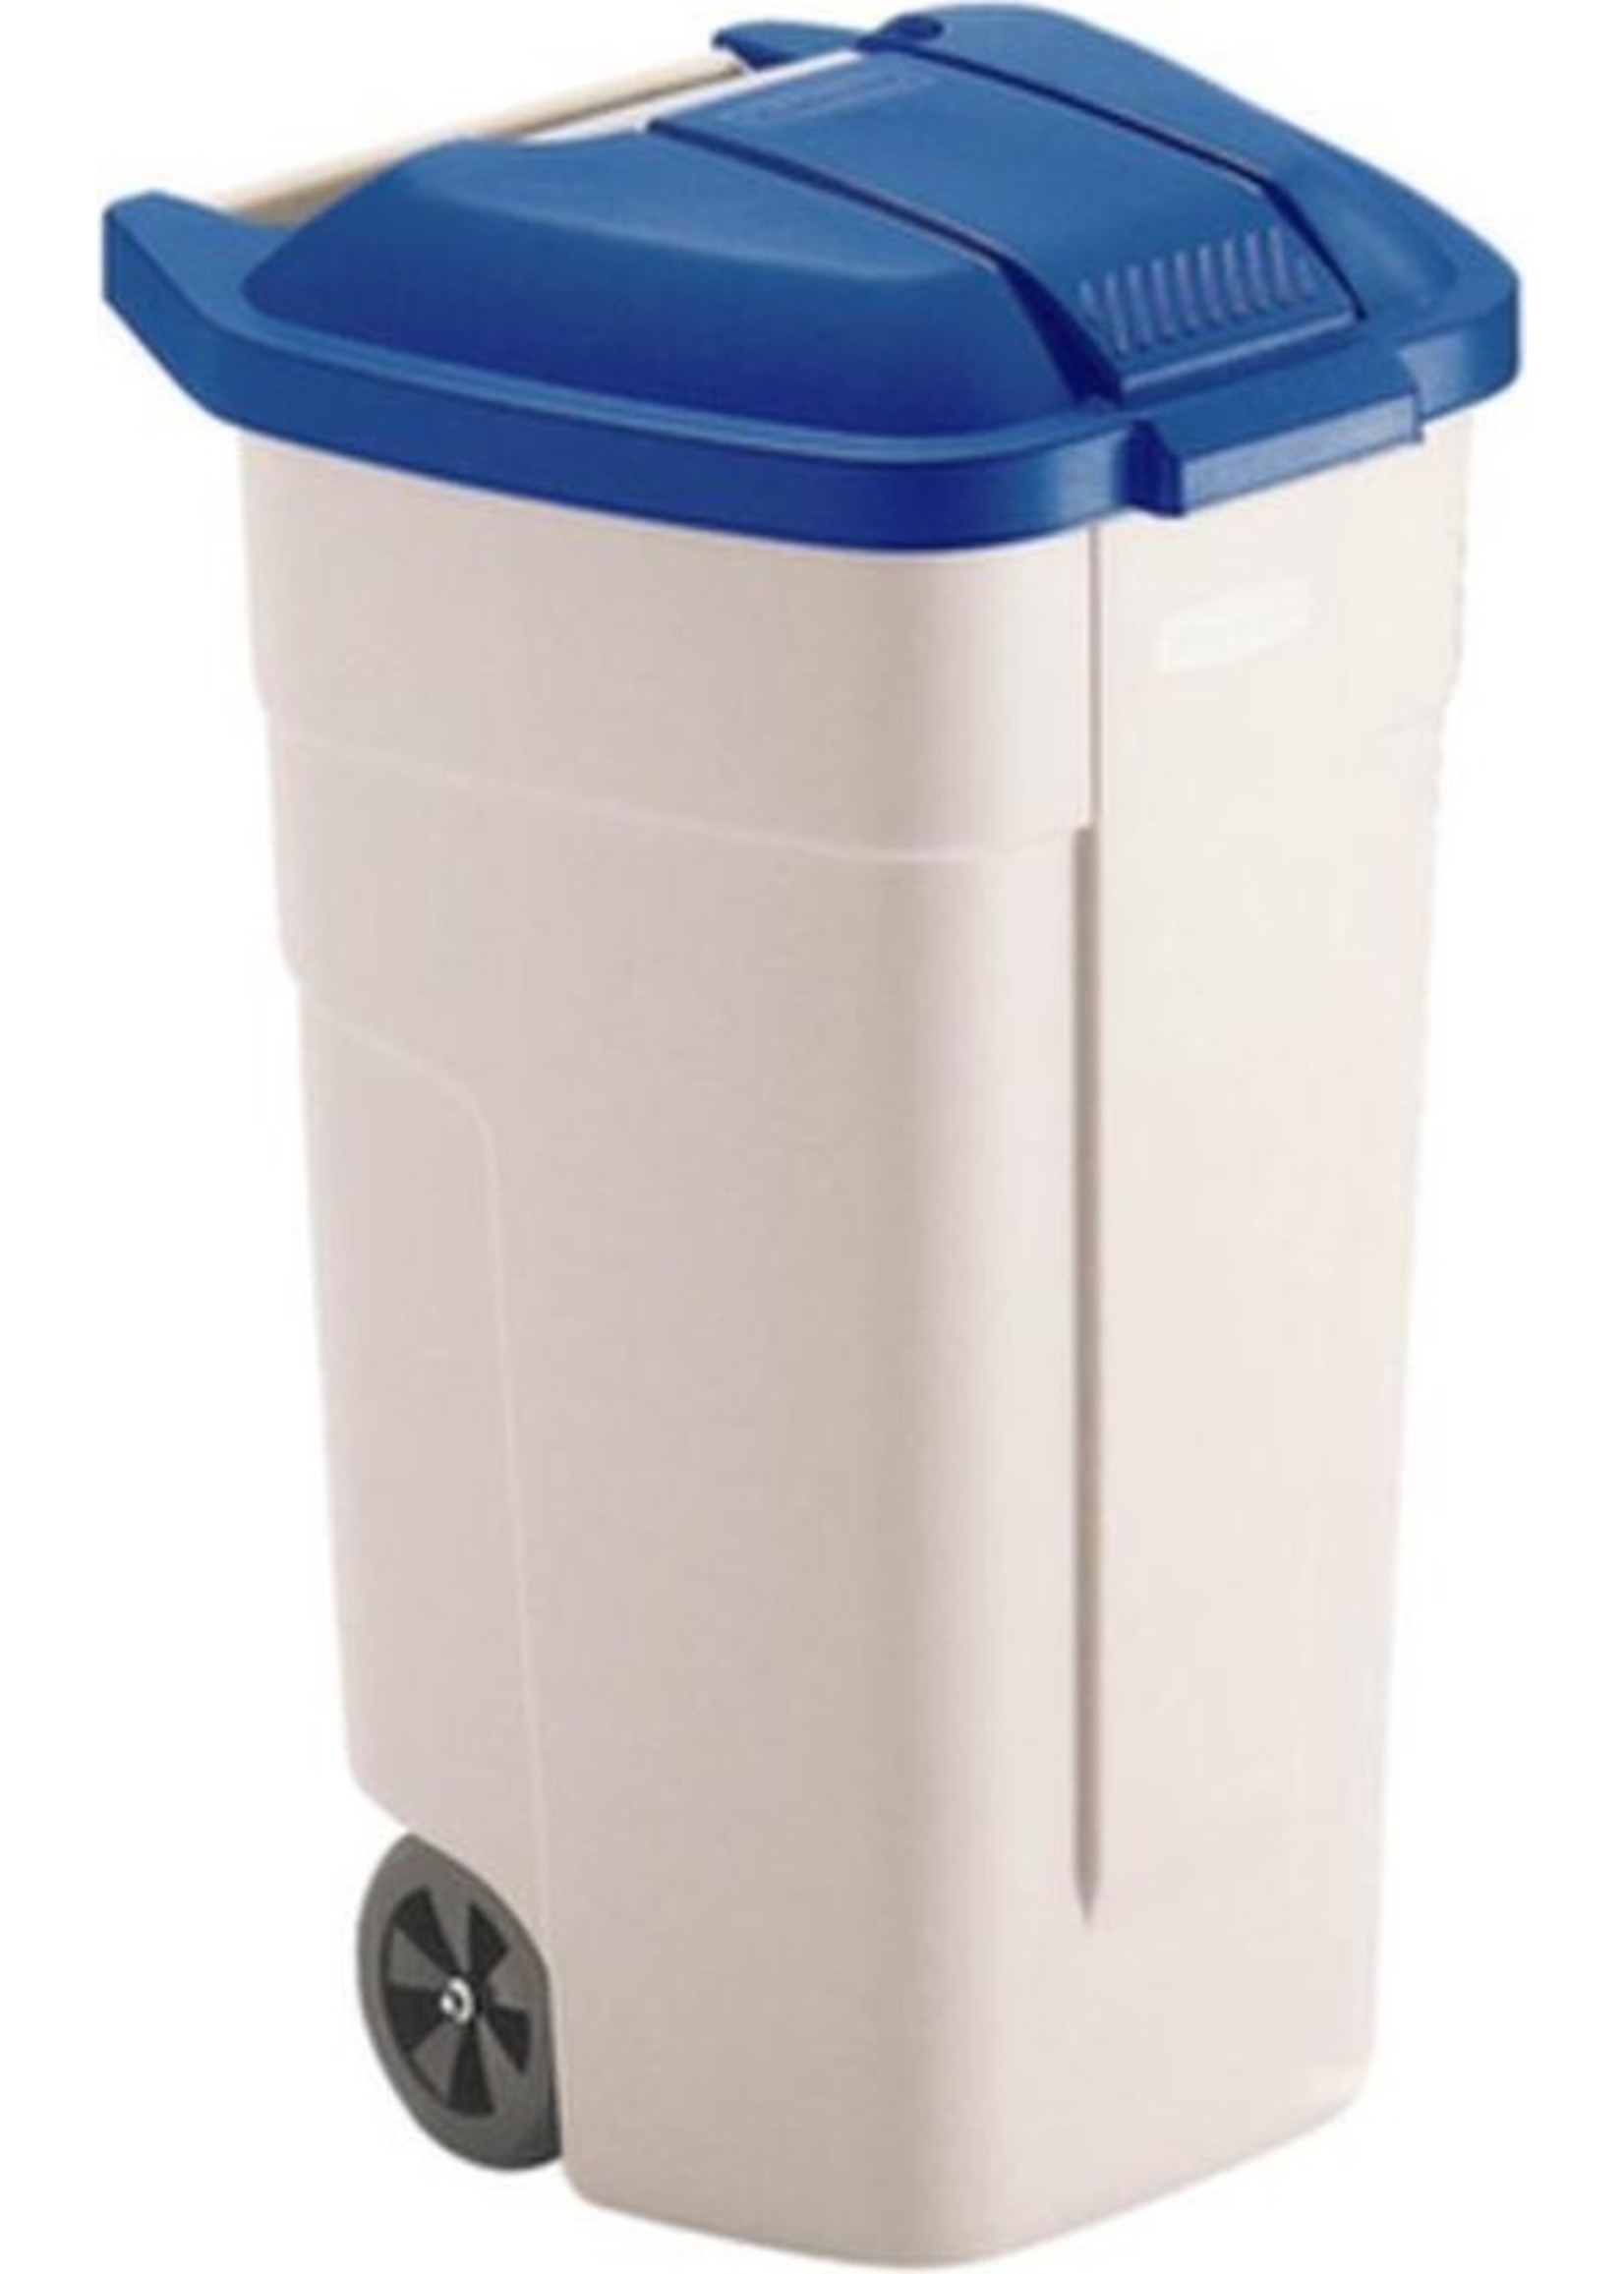 Rubbermaid Outdoor-Abfallbehälter 100 LTR, RUBBERMAID beige mit blauem Deckel